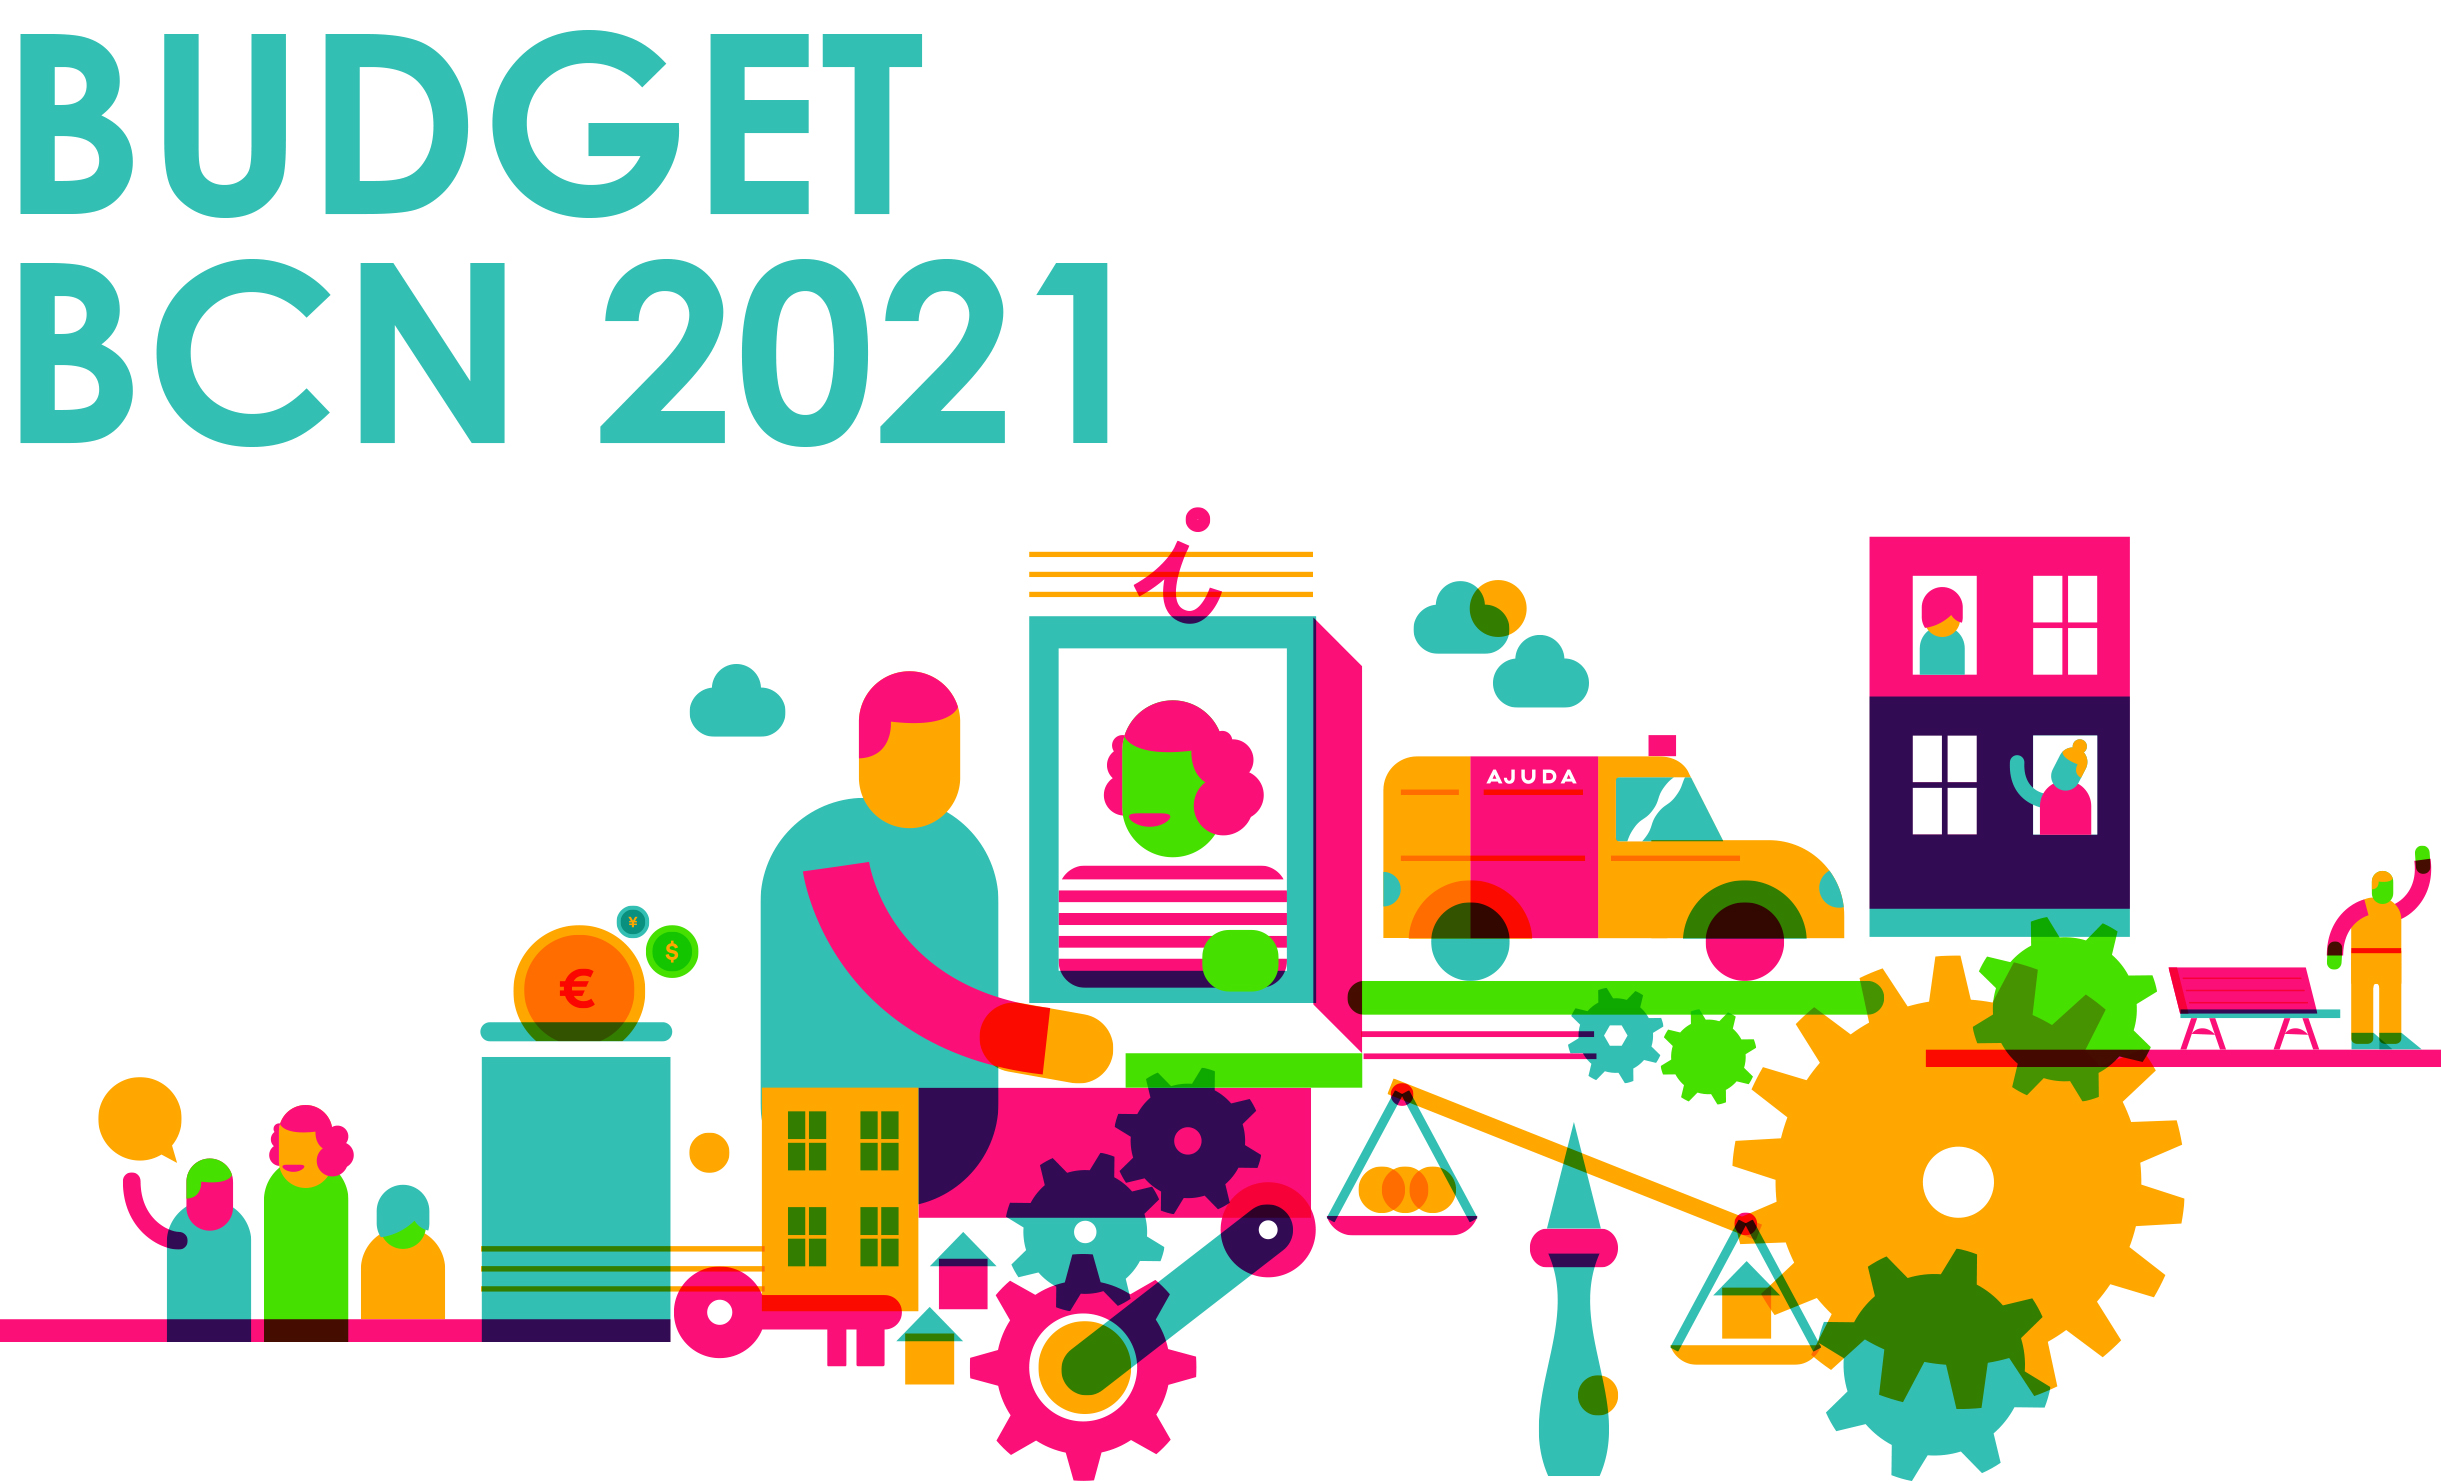 Budget BCN 2021